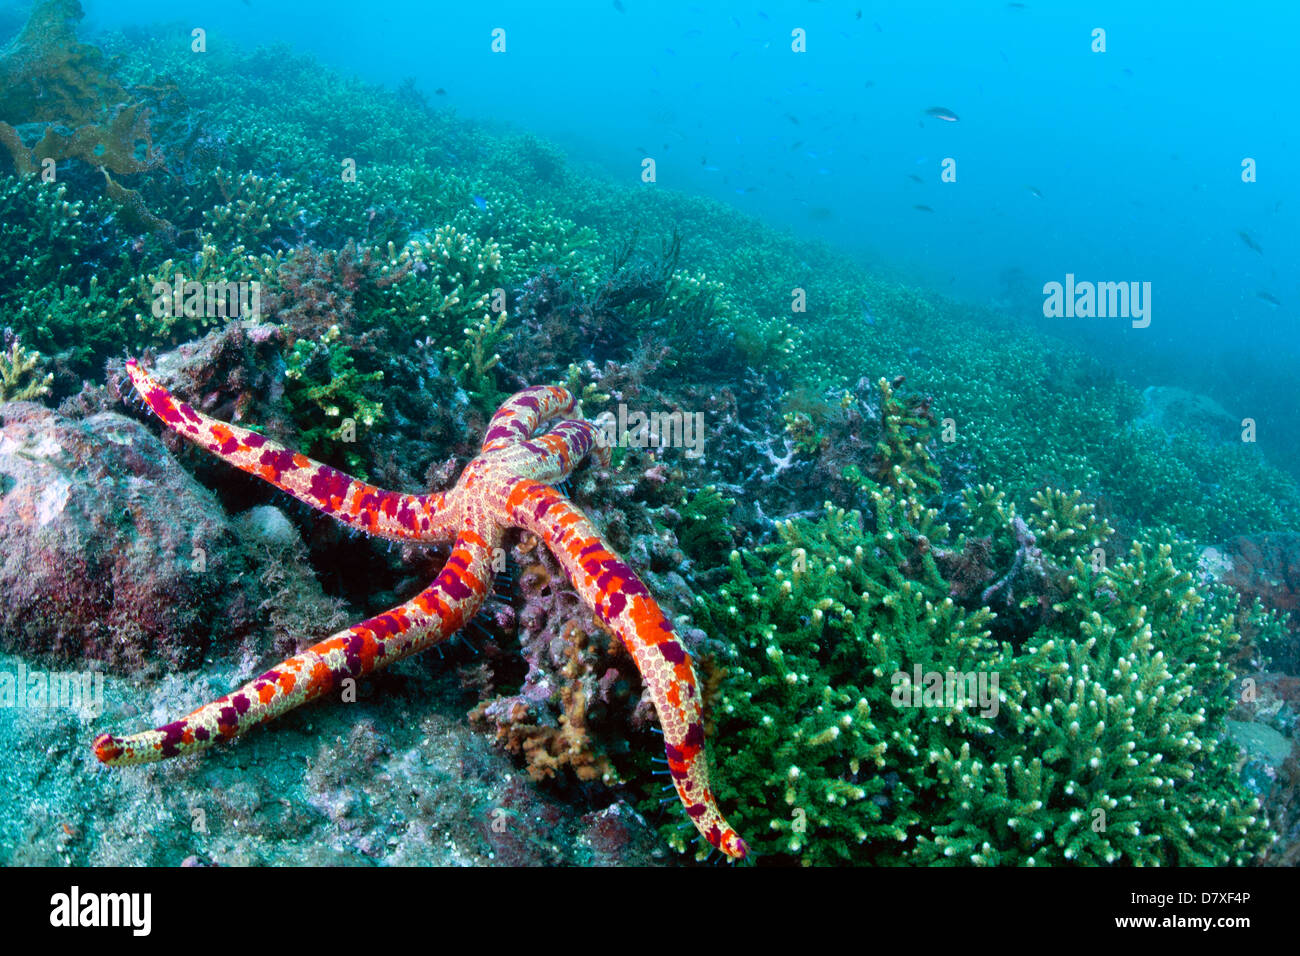 Marine life scene Stock Photo